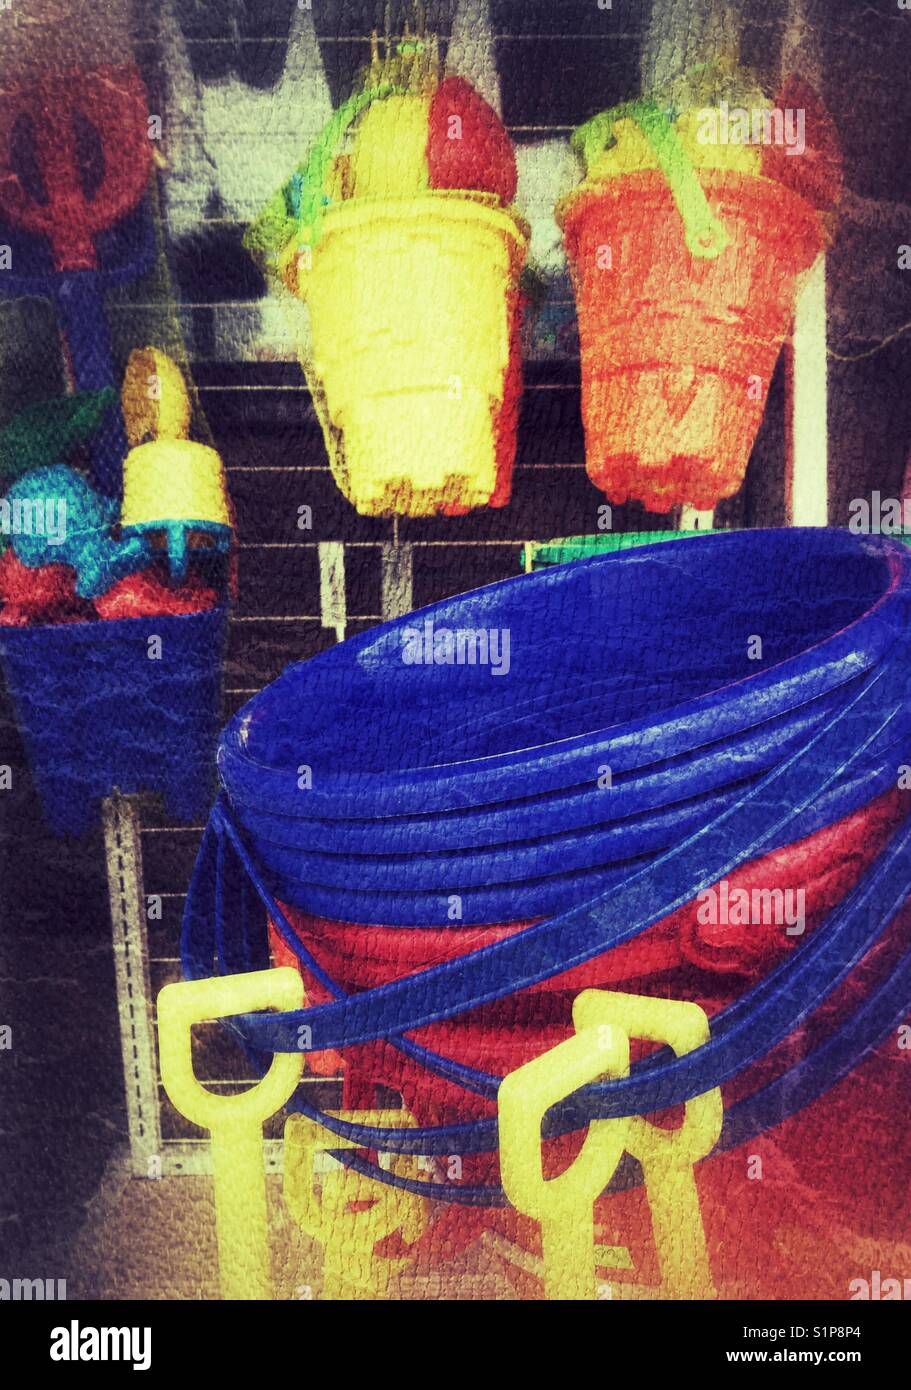 Colourful sand buckets. Stock Photo